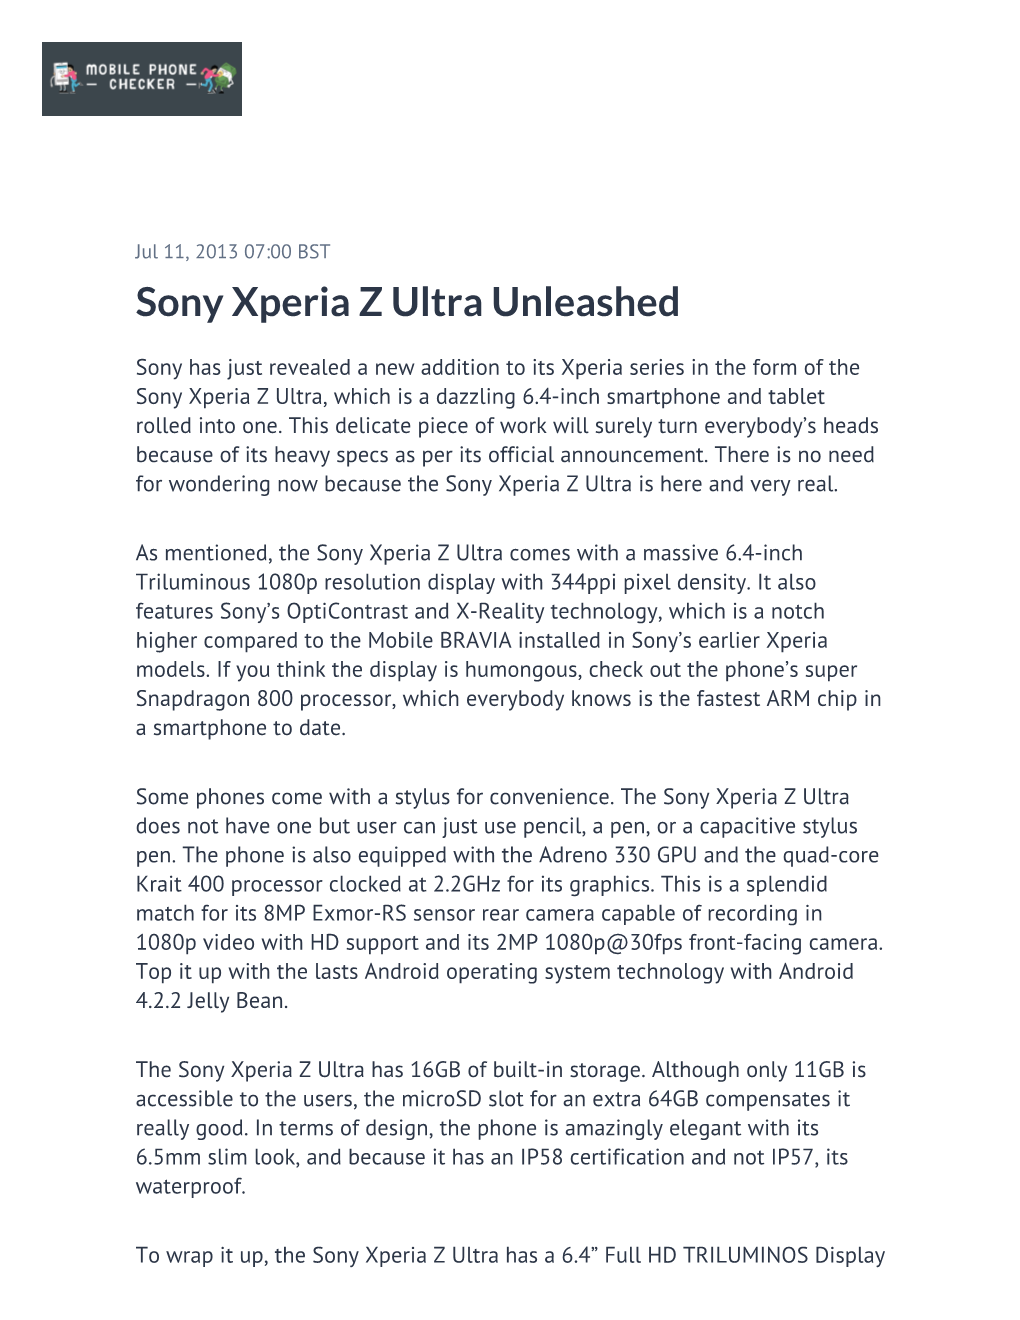 Sony Xperia Z Ultra Unleashed